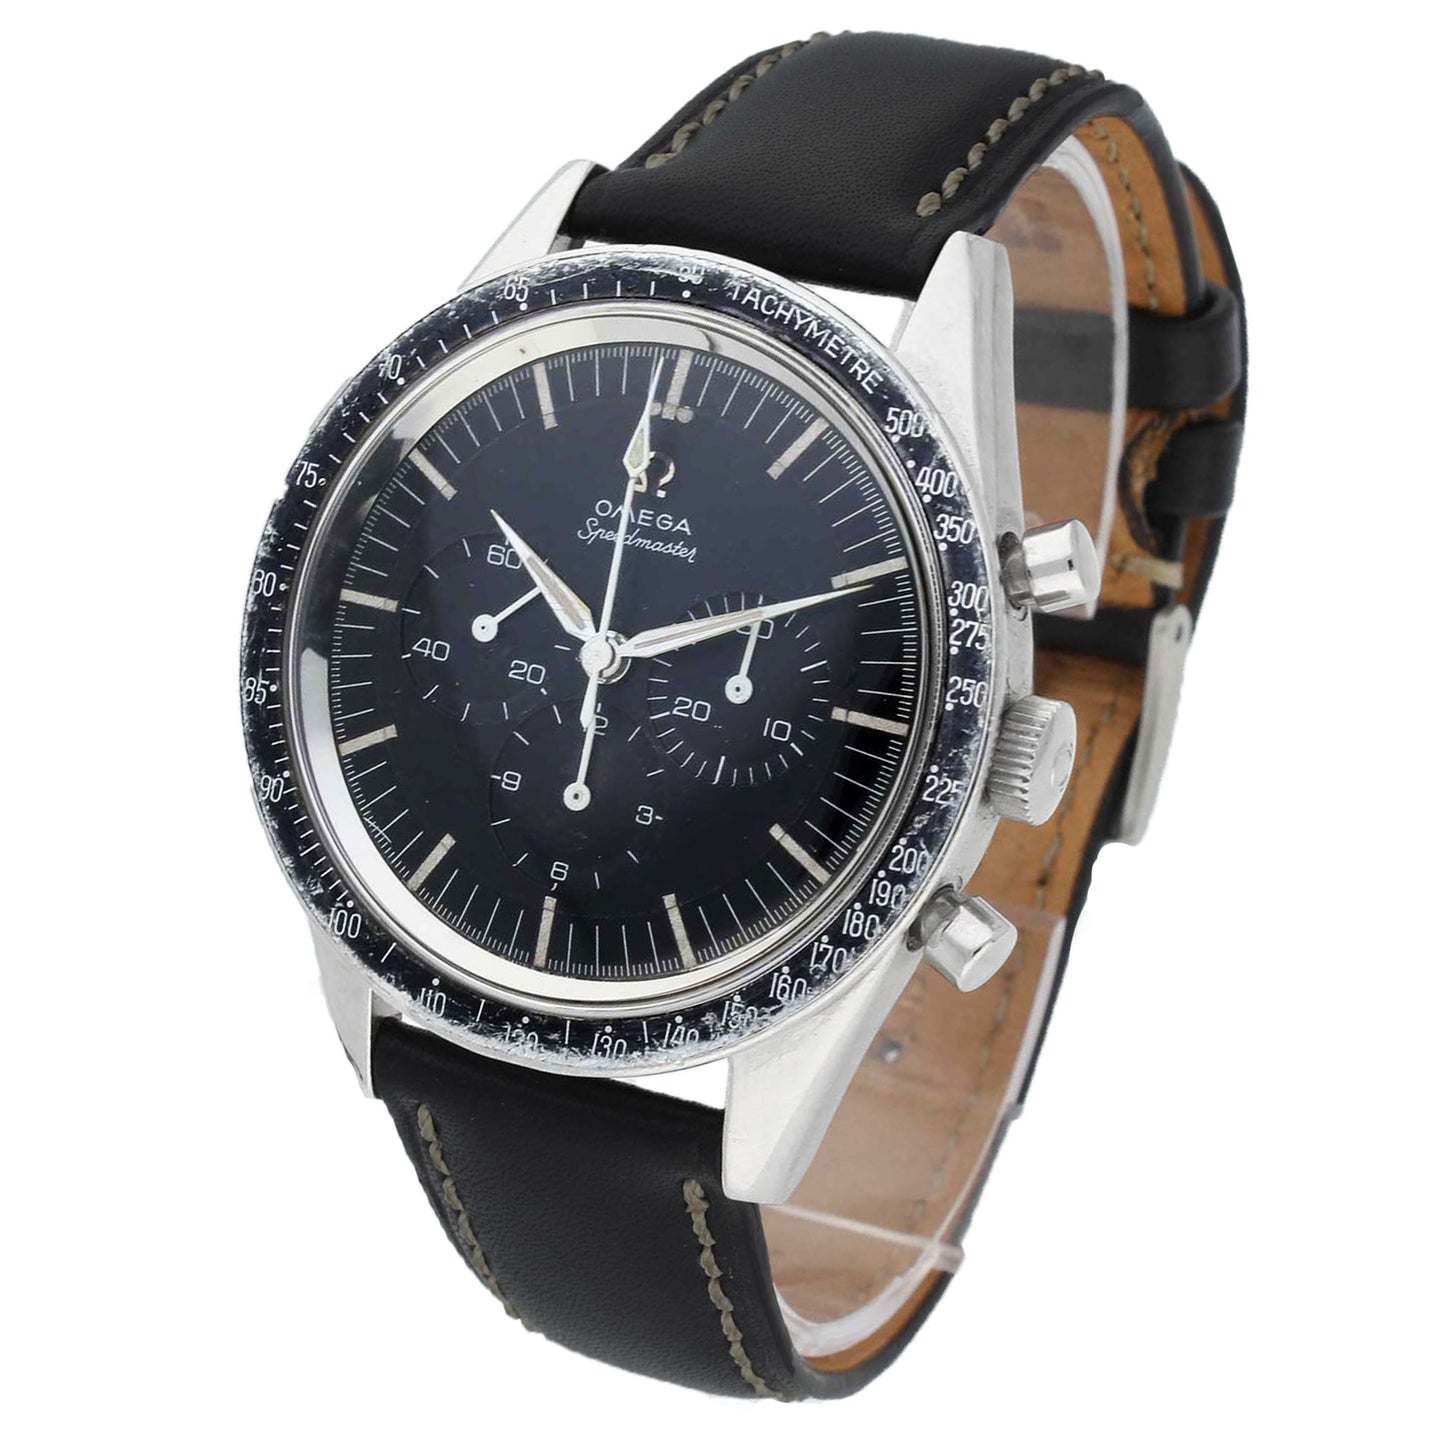 Stainless steel OMEGA Speedmaster ref 2998/4 wristwatch. Made 1963